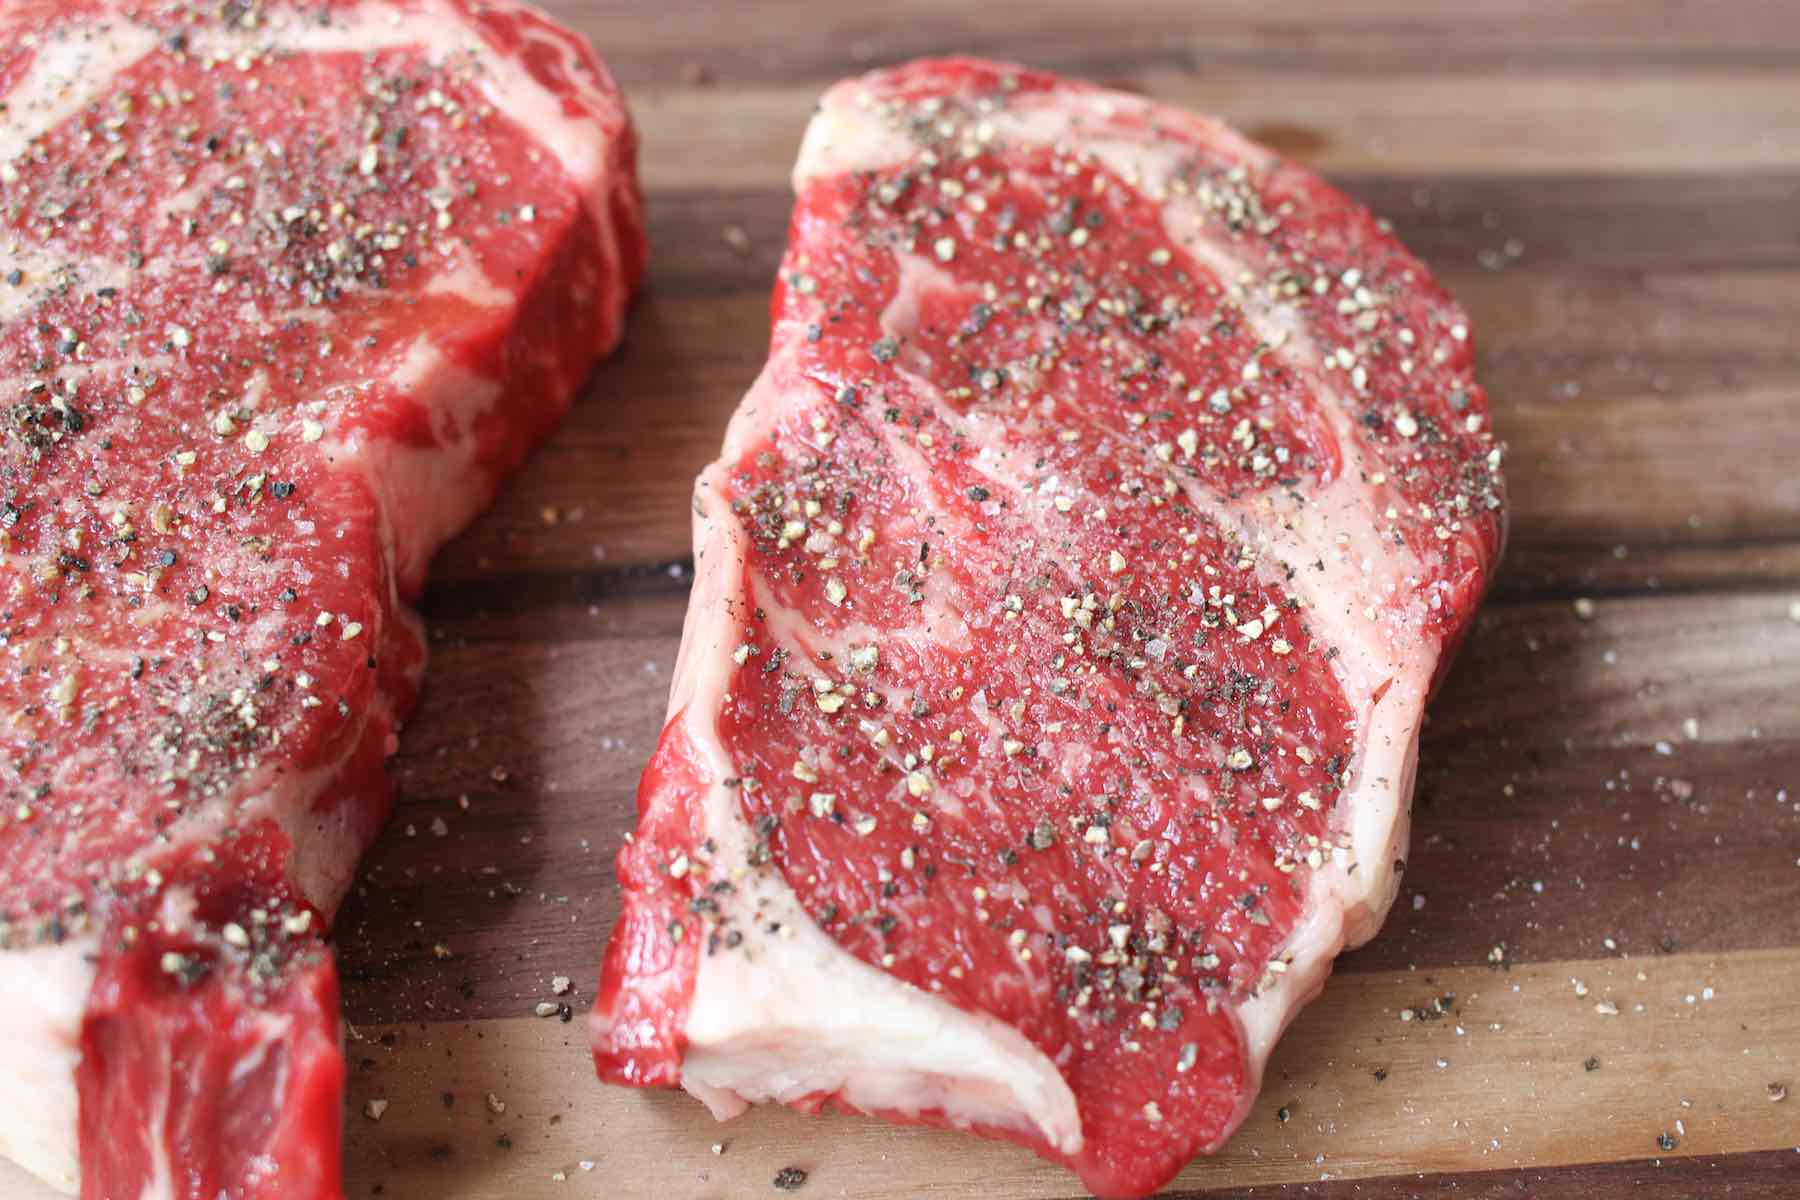 Closeup of seasoning of coarse salt and black pepper on a rib eye steak before cooking